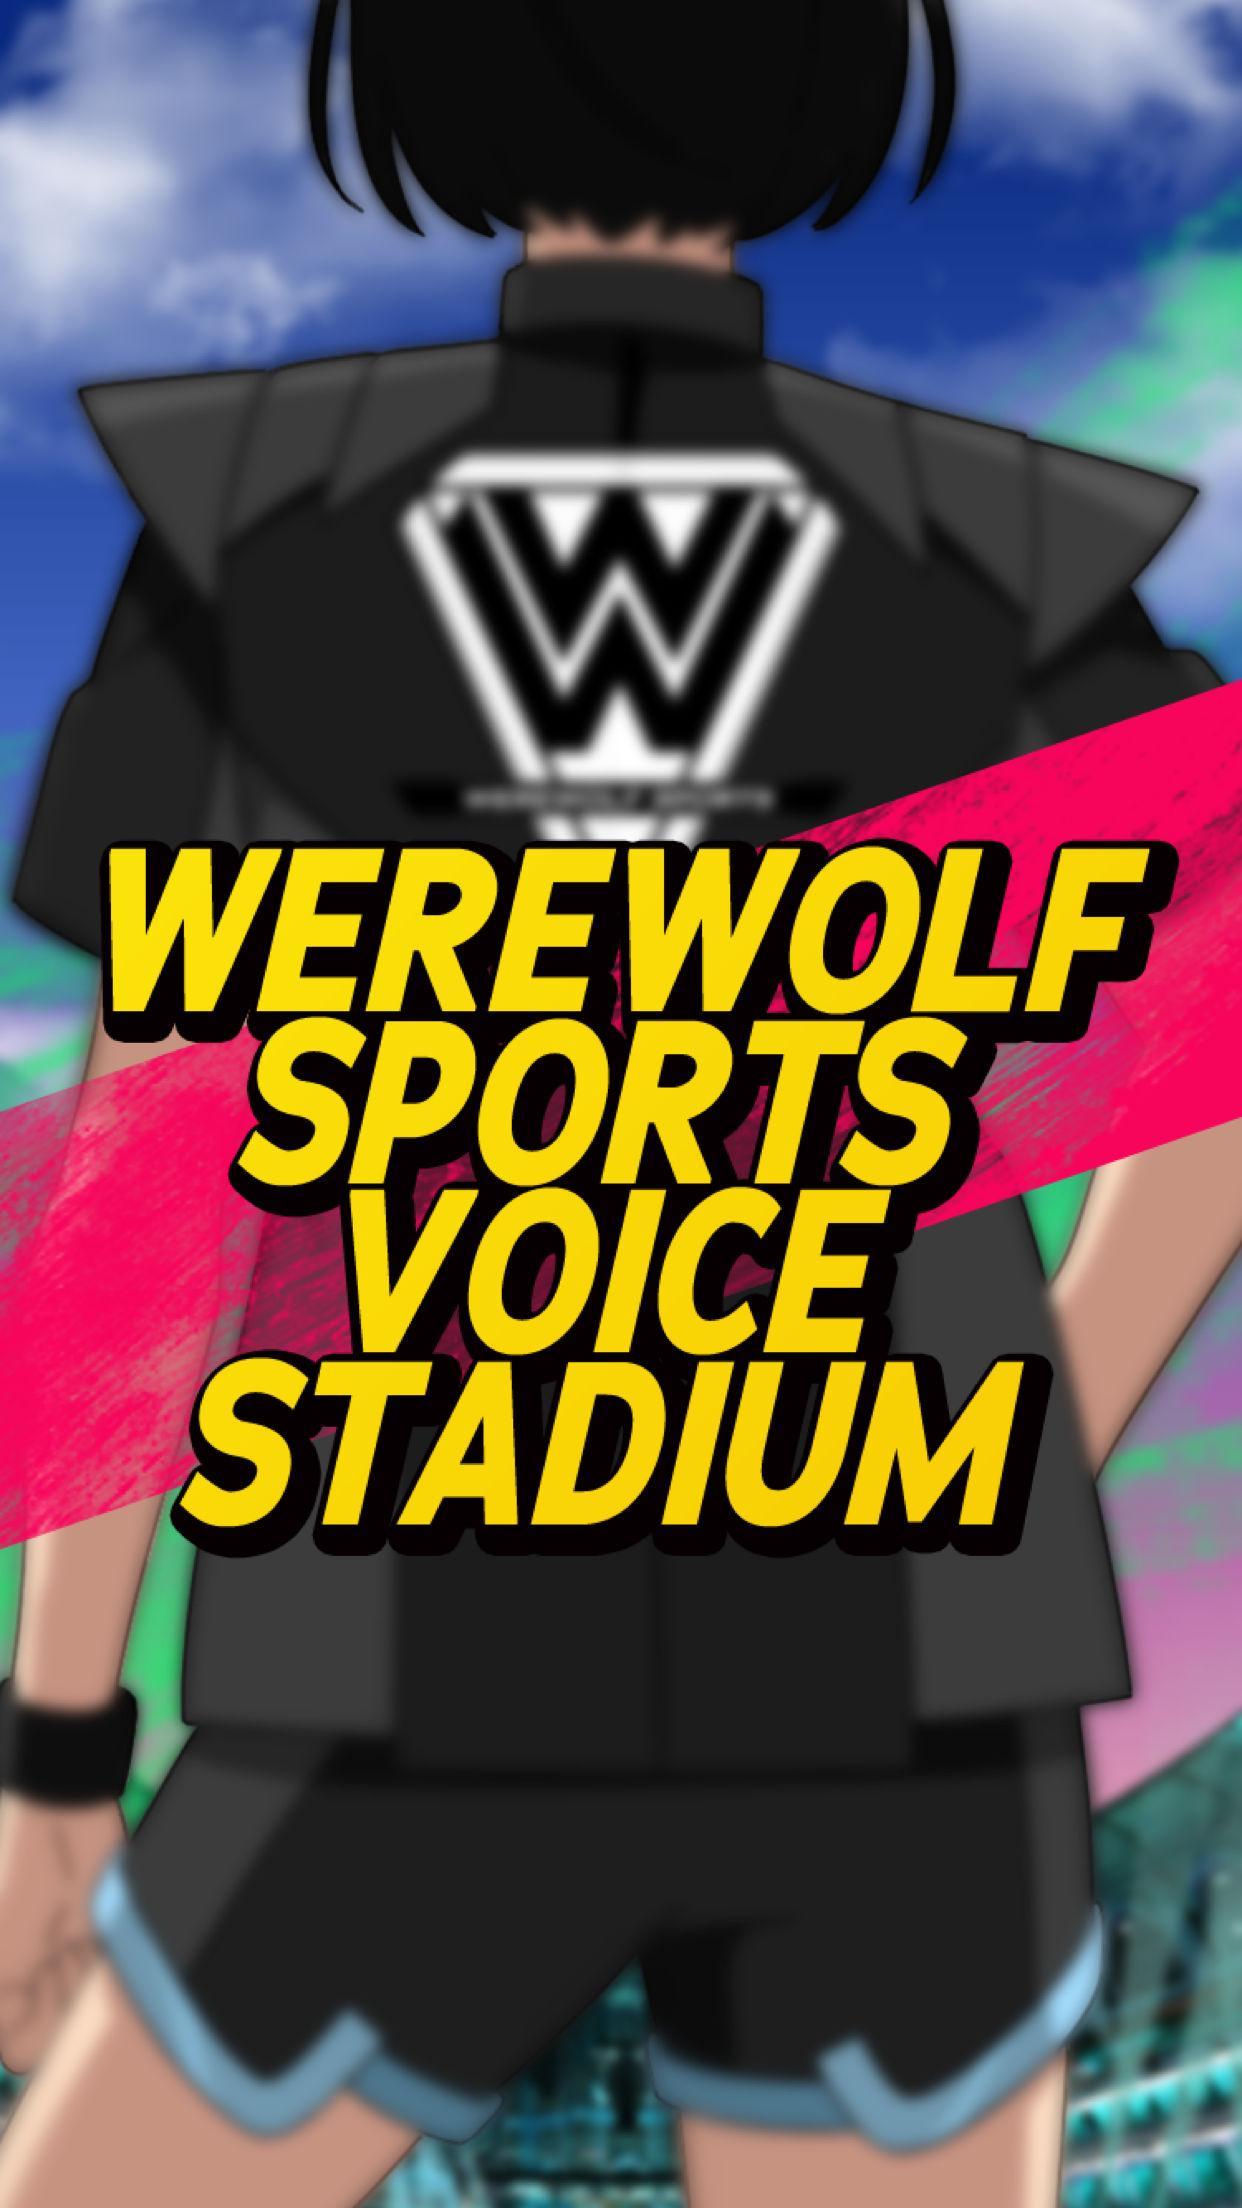 Screenshot 1 of Stadium Suara Sukan Werewolf 1.3.4